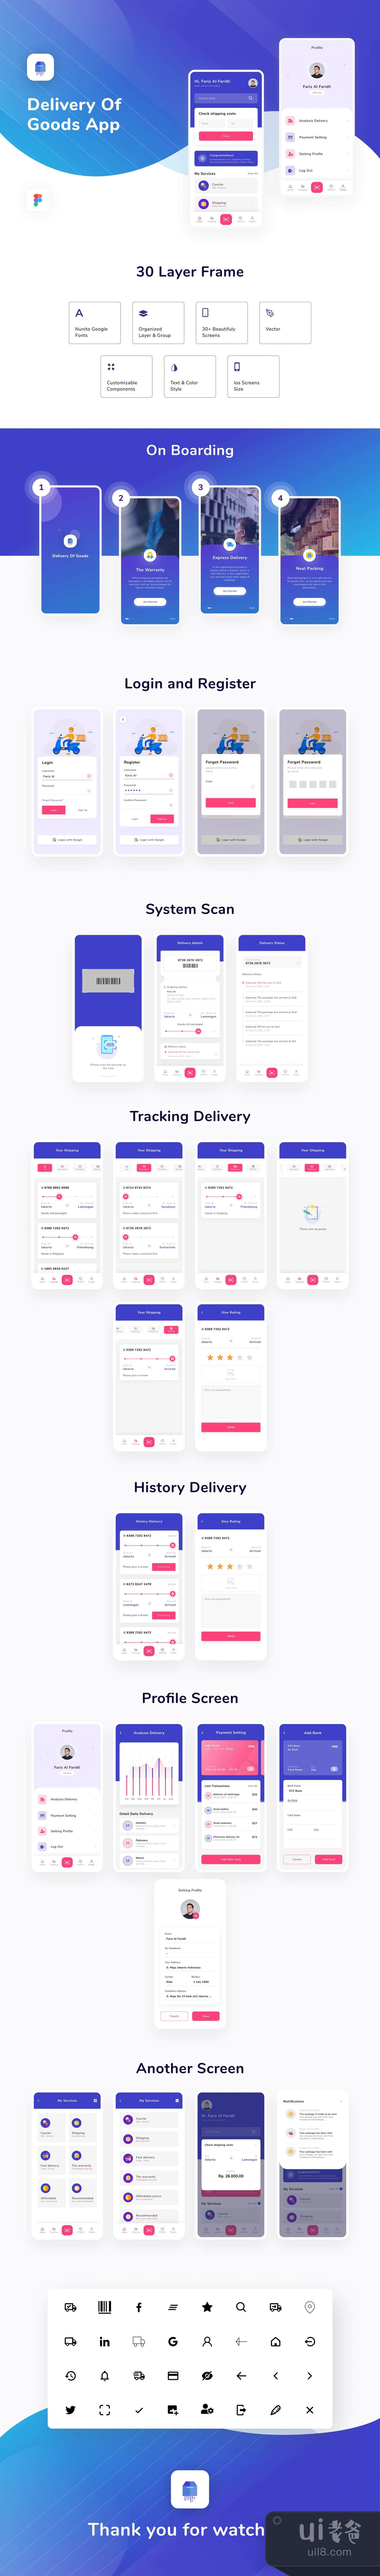 交付货物的应用程序 (Delivery Of Goods App)插图1